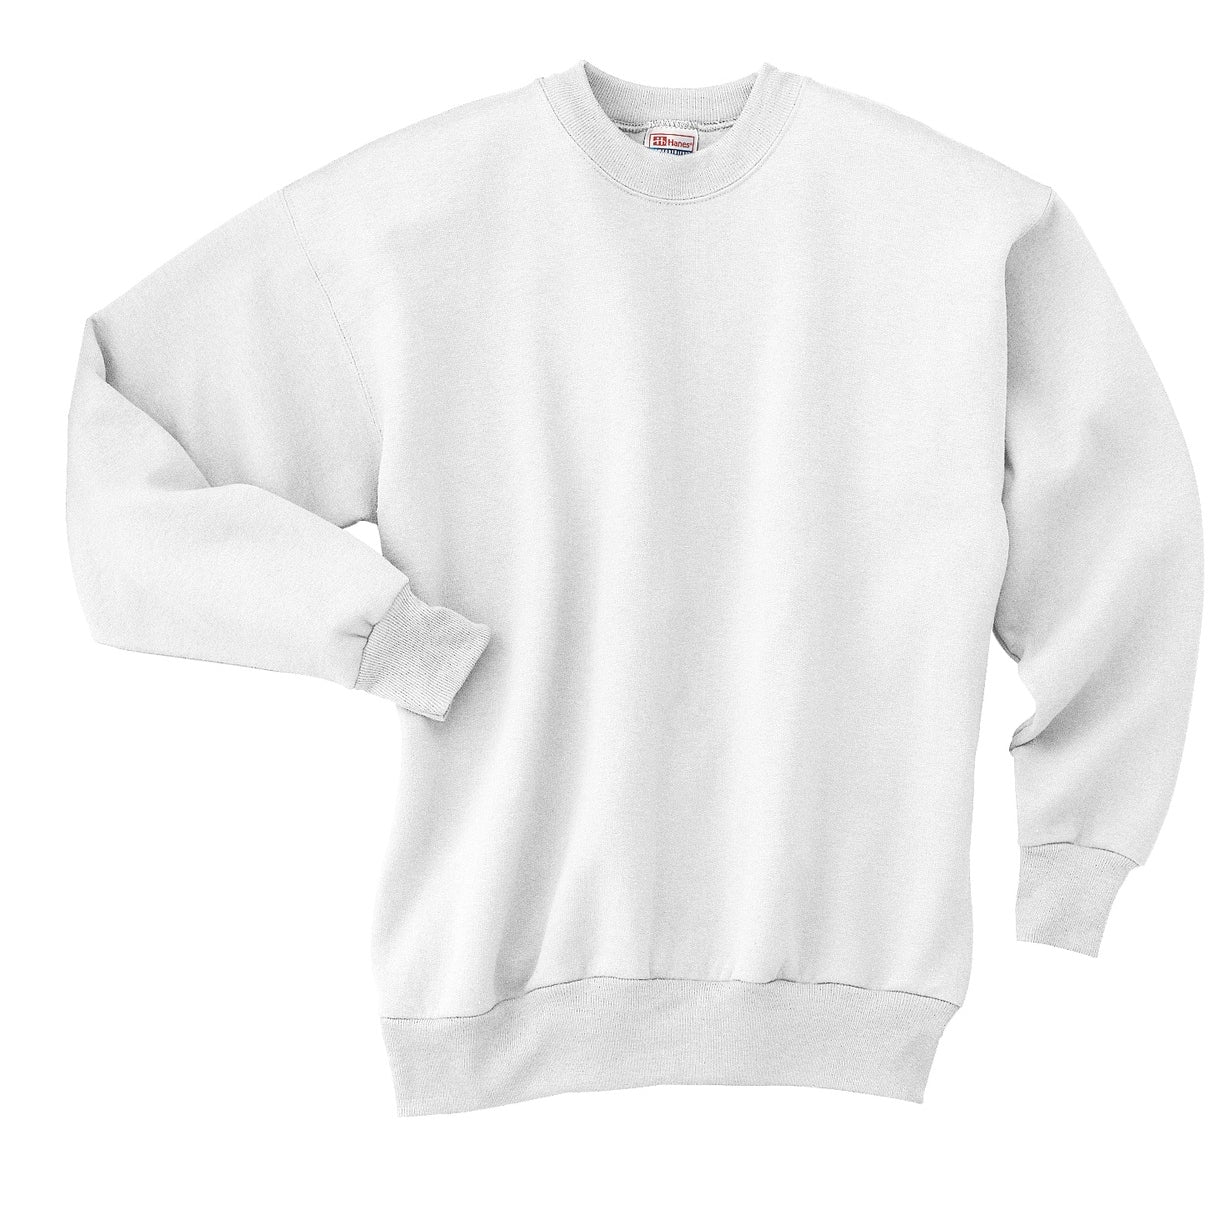 Cle Browns Crewneck Sweatshirt